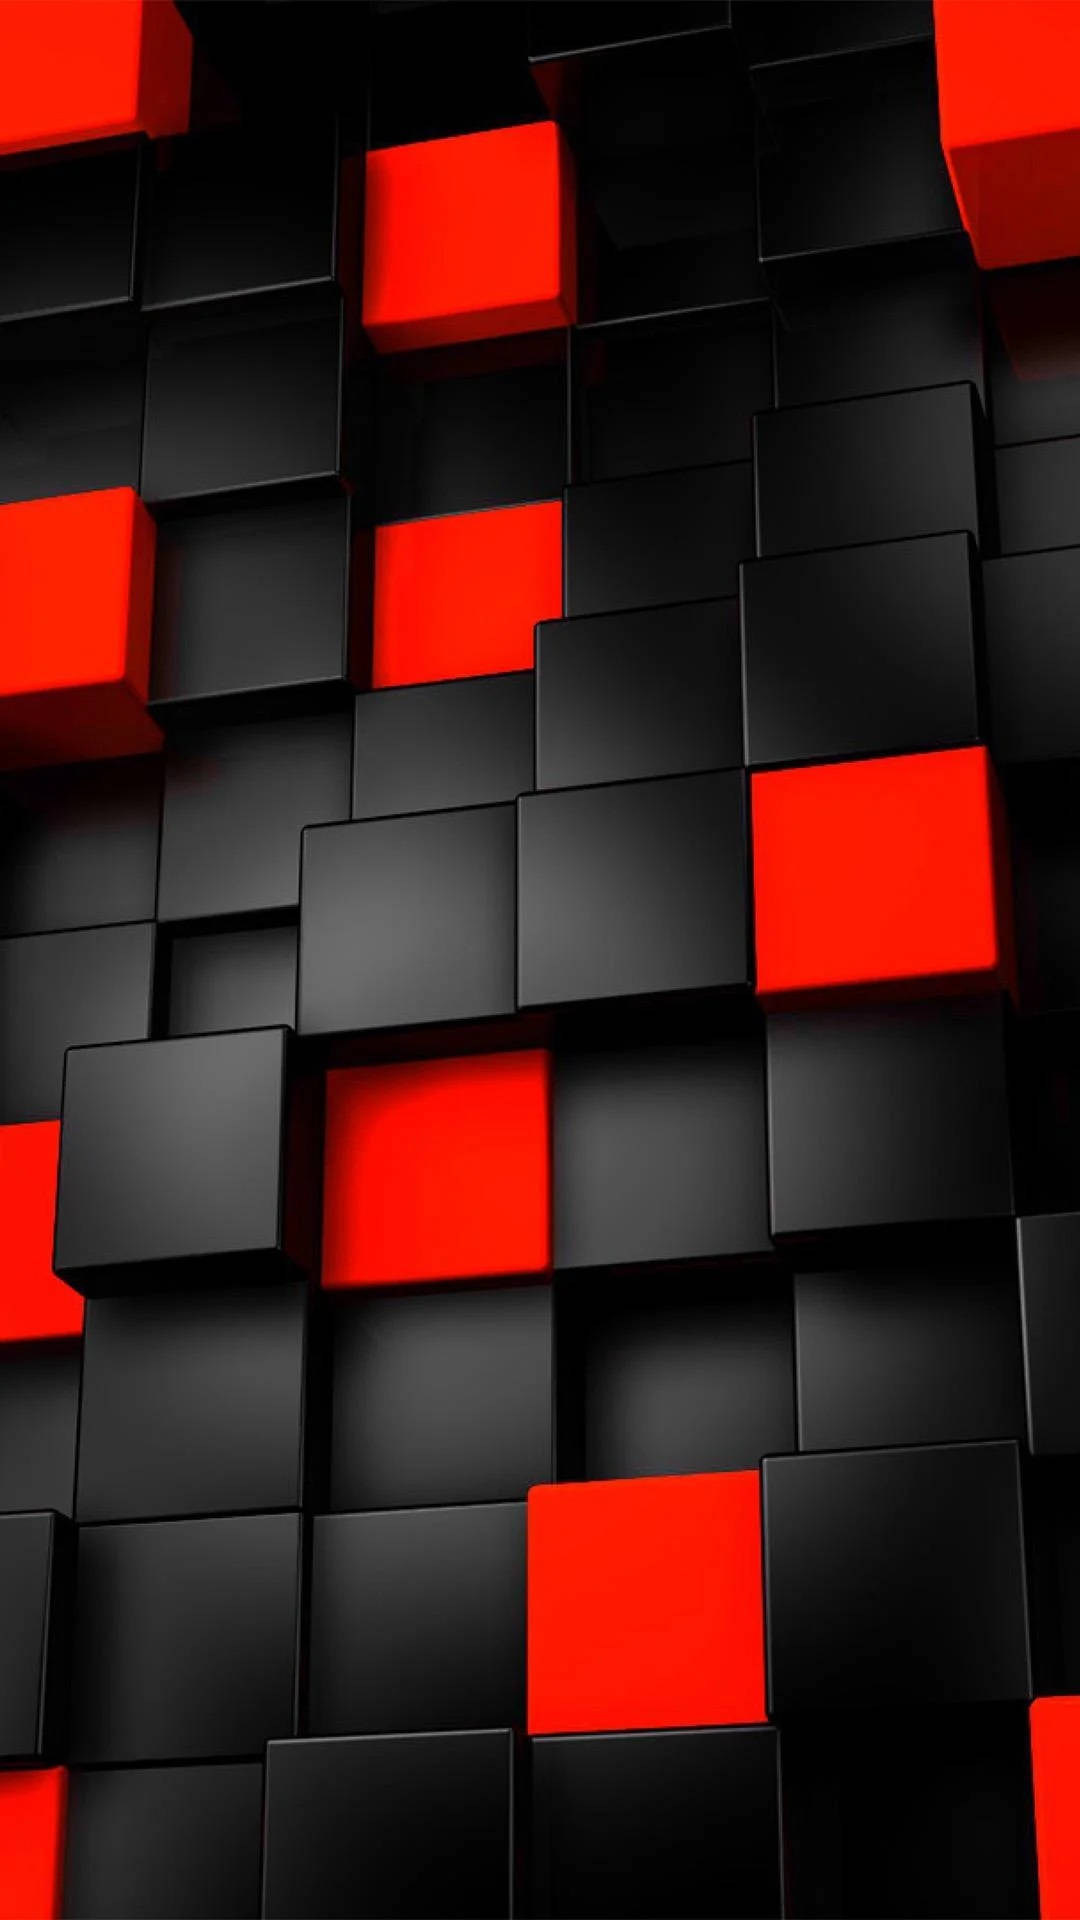 Cube Mønstret Sort Og Rød Iphone Wallpaper